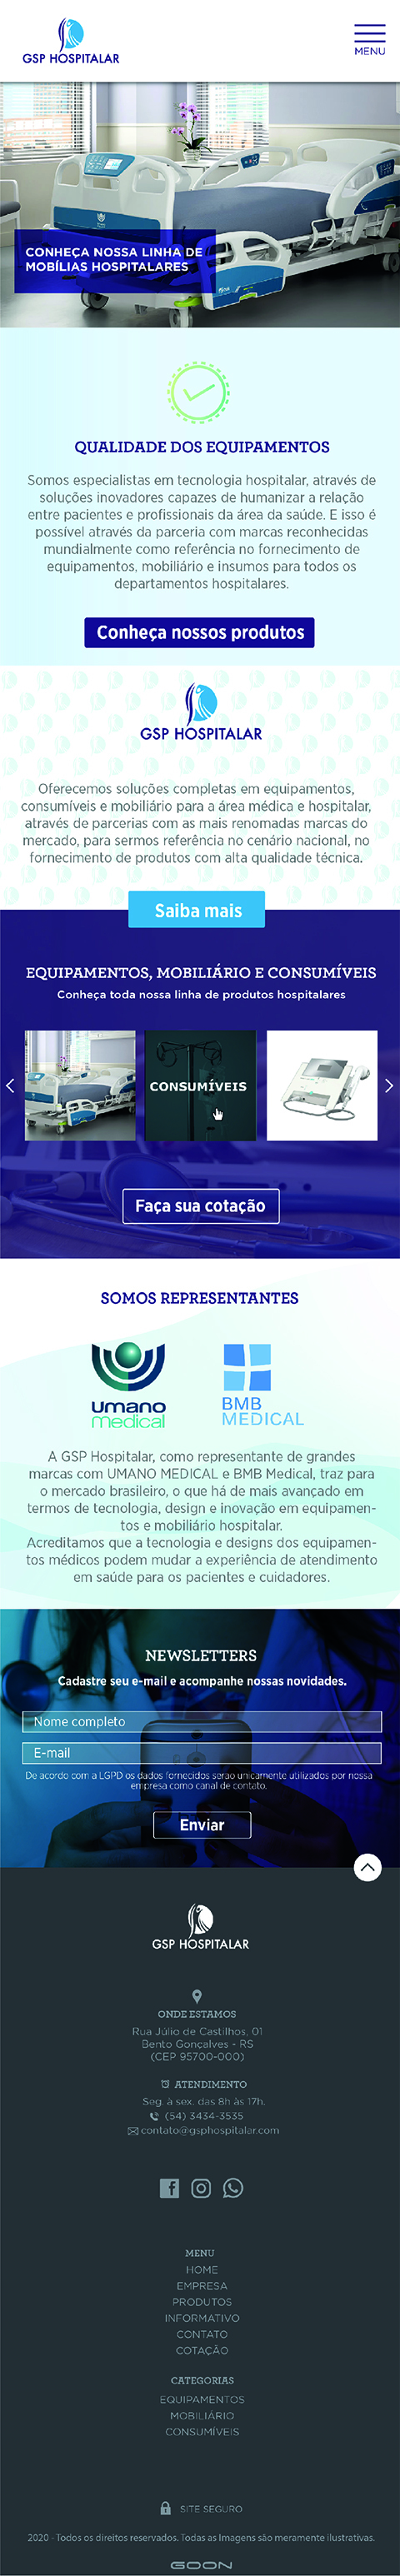 Layout GSP Hospitalar versão mobile